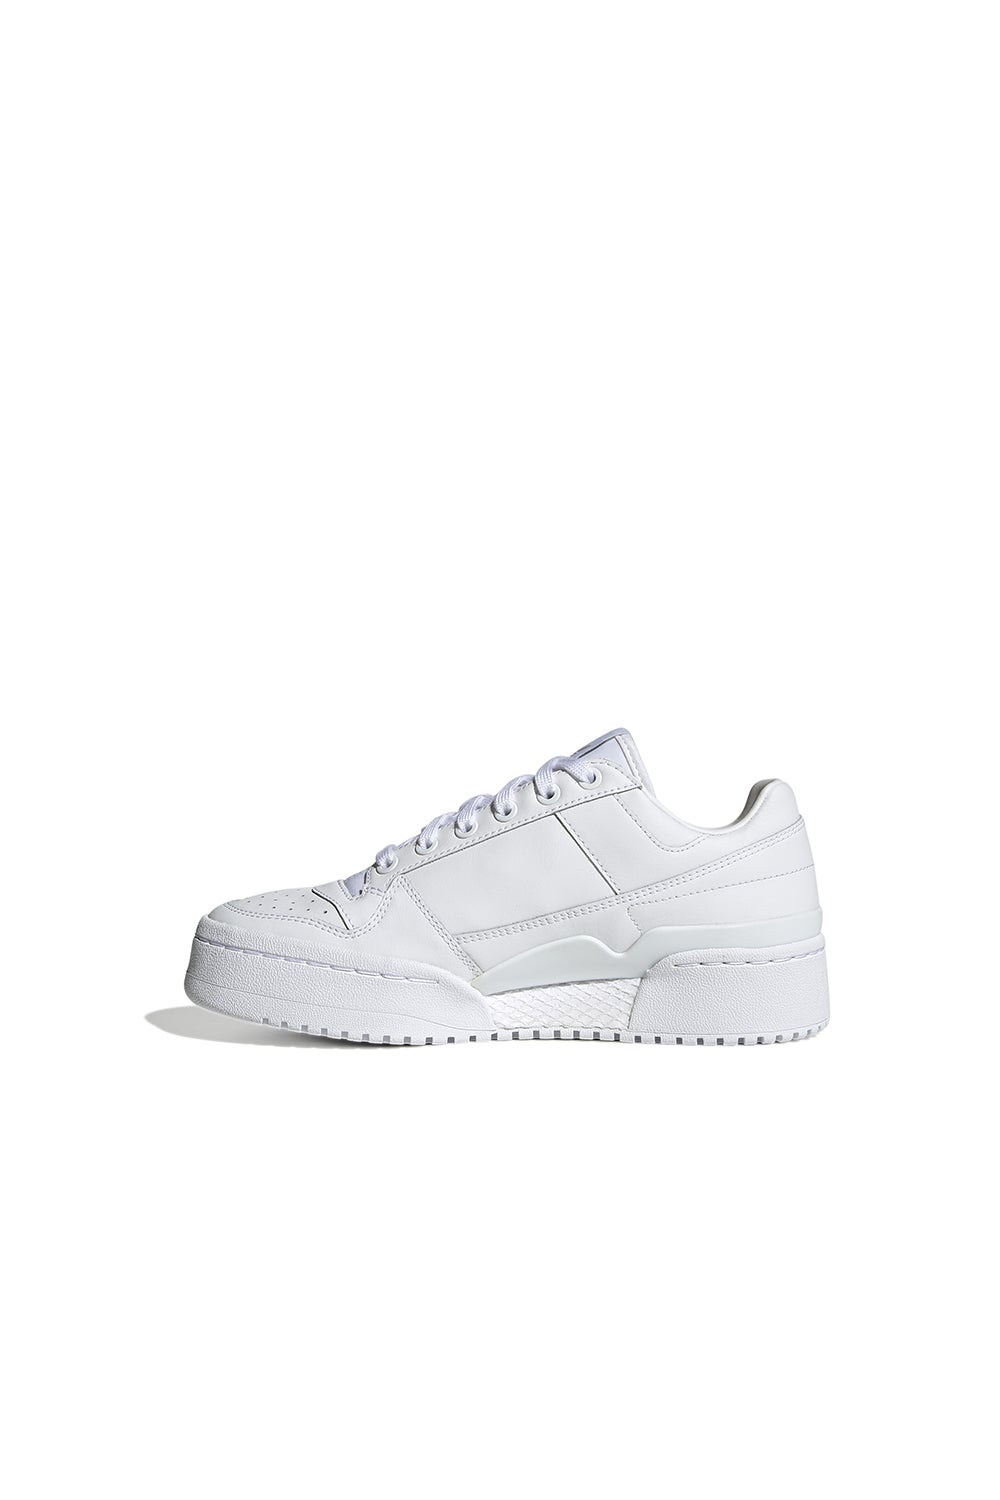 adidas Forum Bold W Shoes Cloud White/Core Black